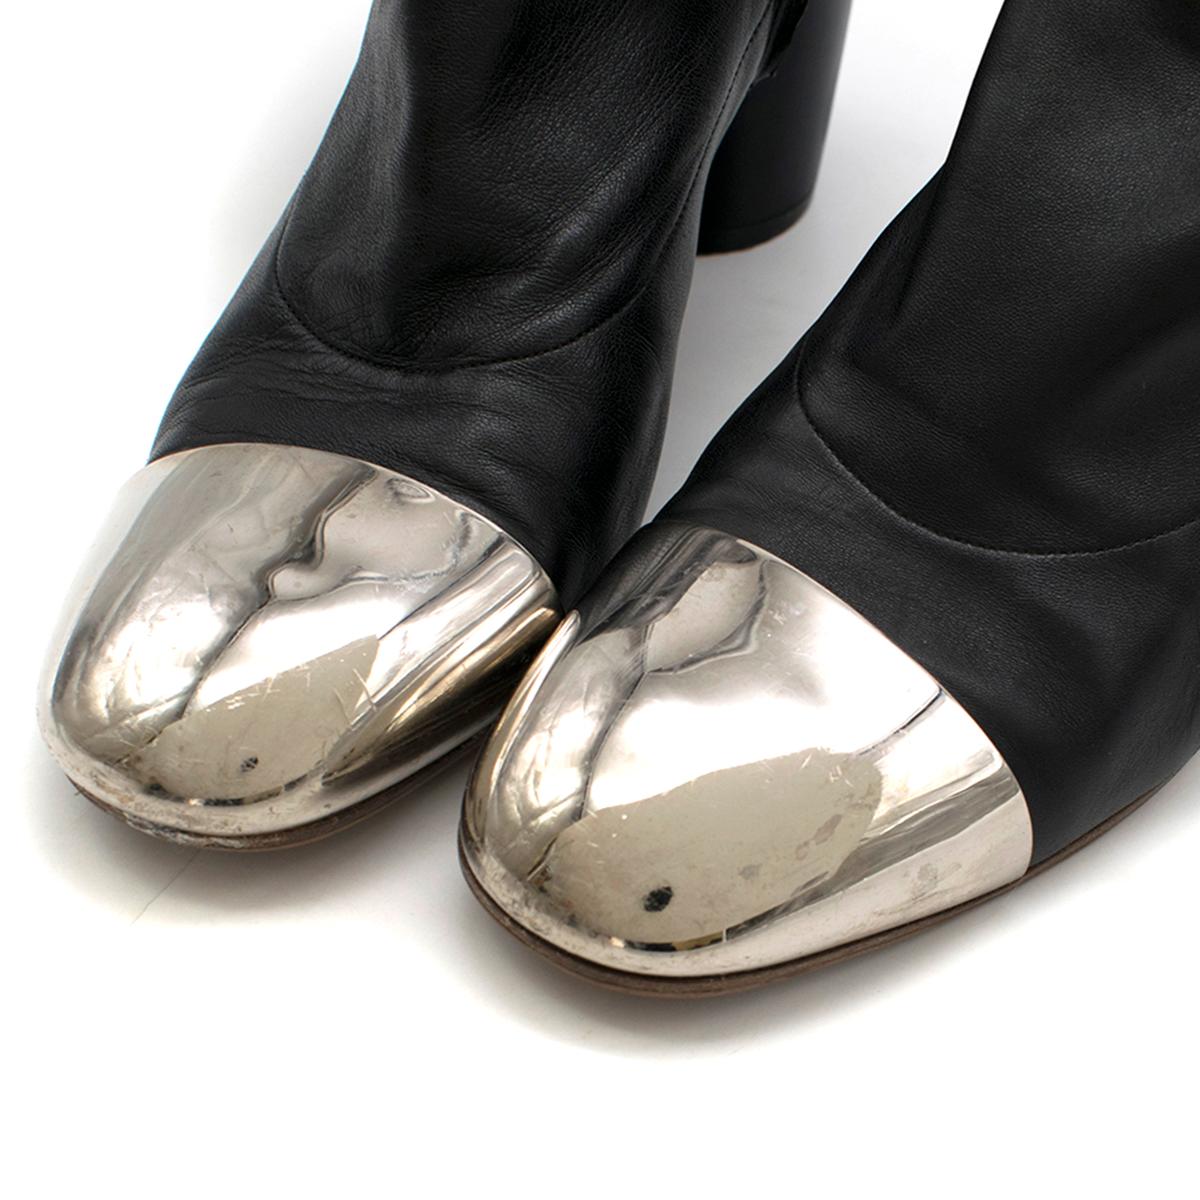 Black Proenza Schouler metal-cap lace-back leather ankle boots Size 41